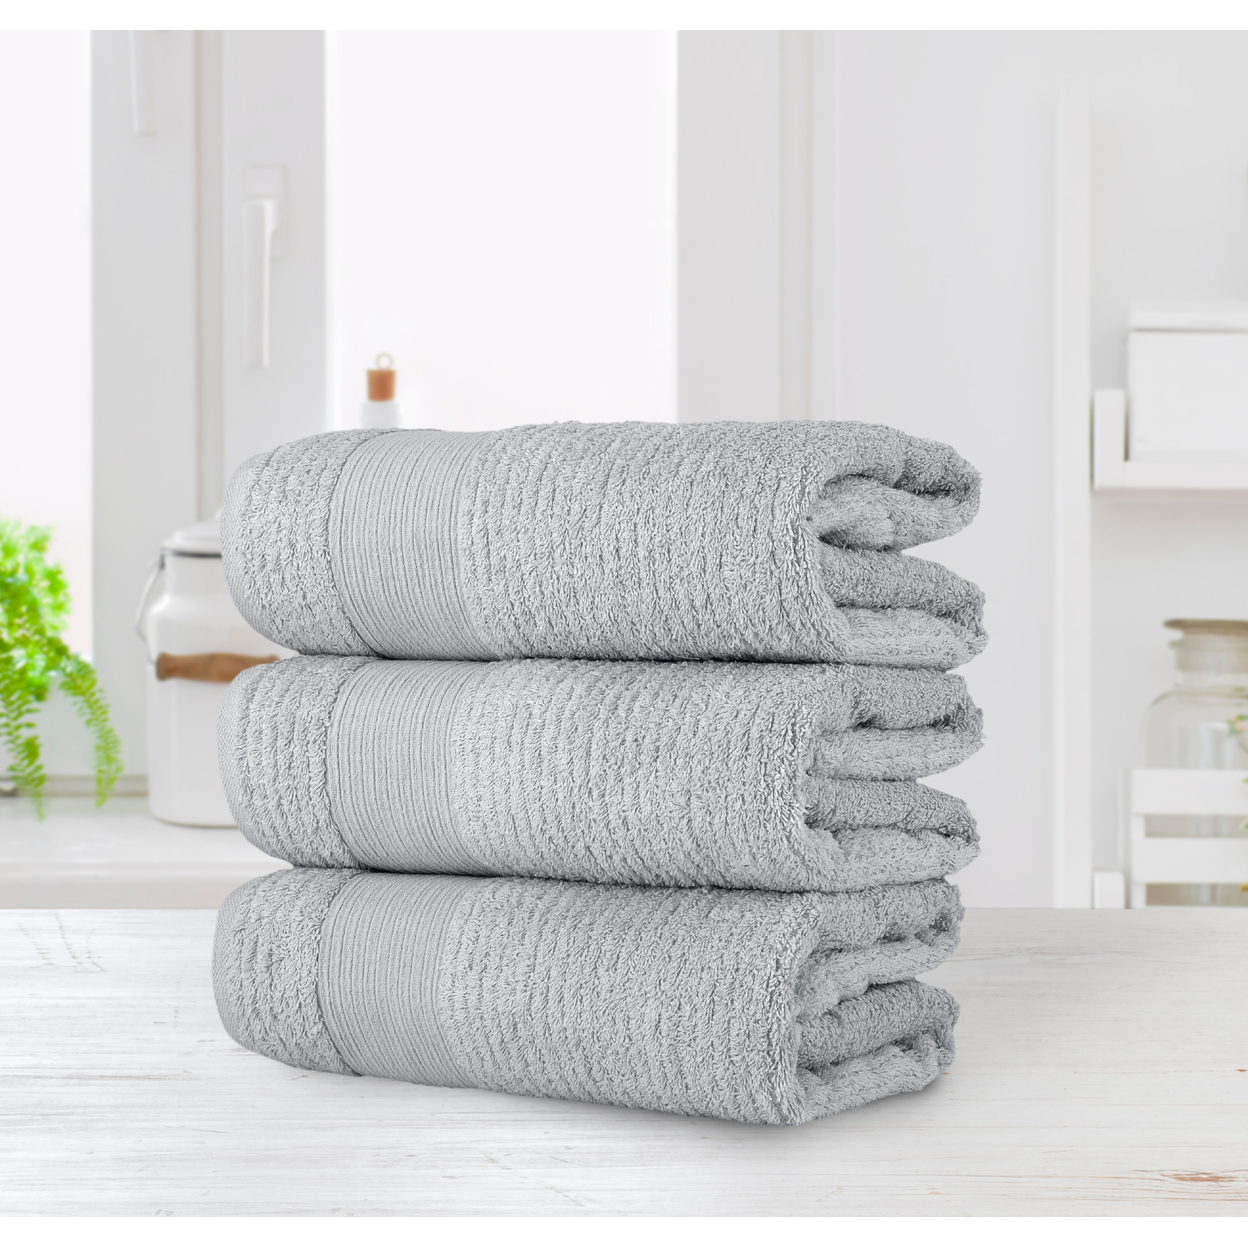 Chic Home Luxurious 3-Piece 100% Pure Turkish Cotton Bath Towels, 30 X 60, Jacquard Weave Design, OEKO-TEX Certified Set - Grey